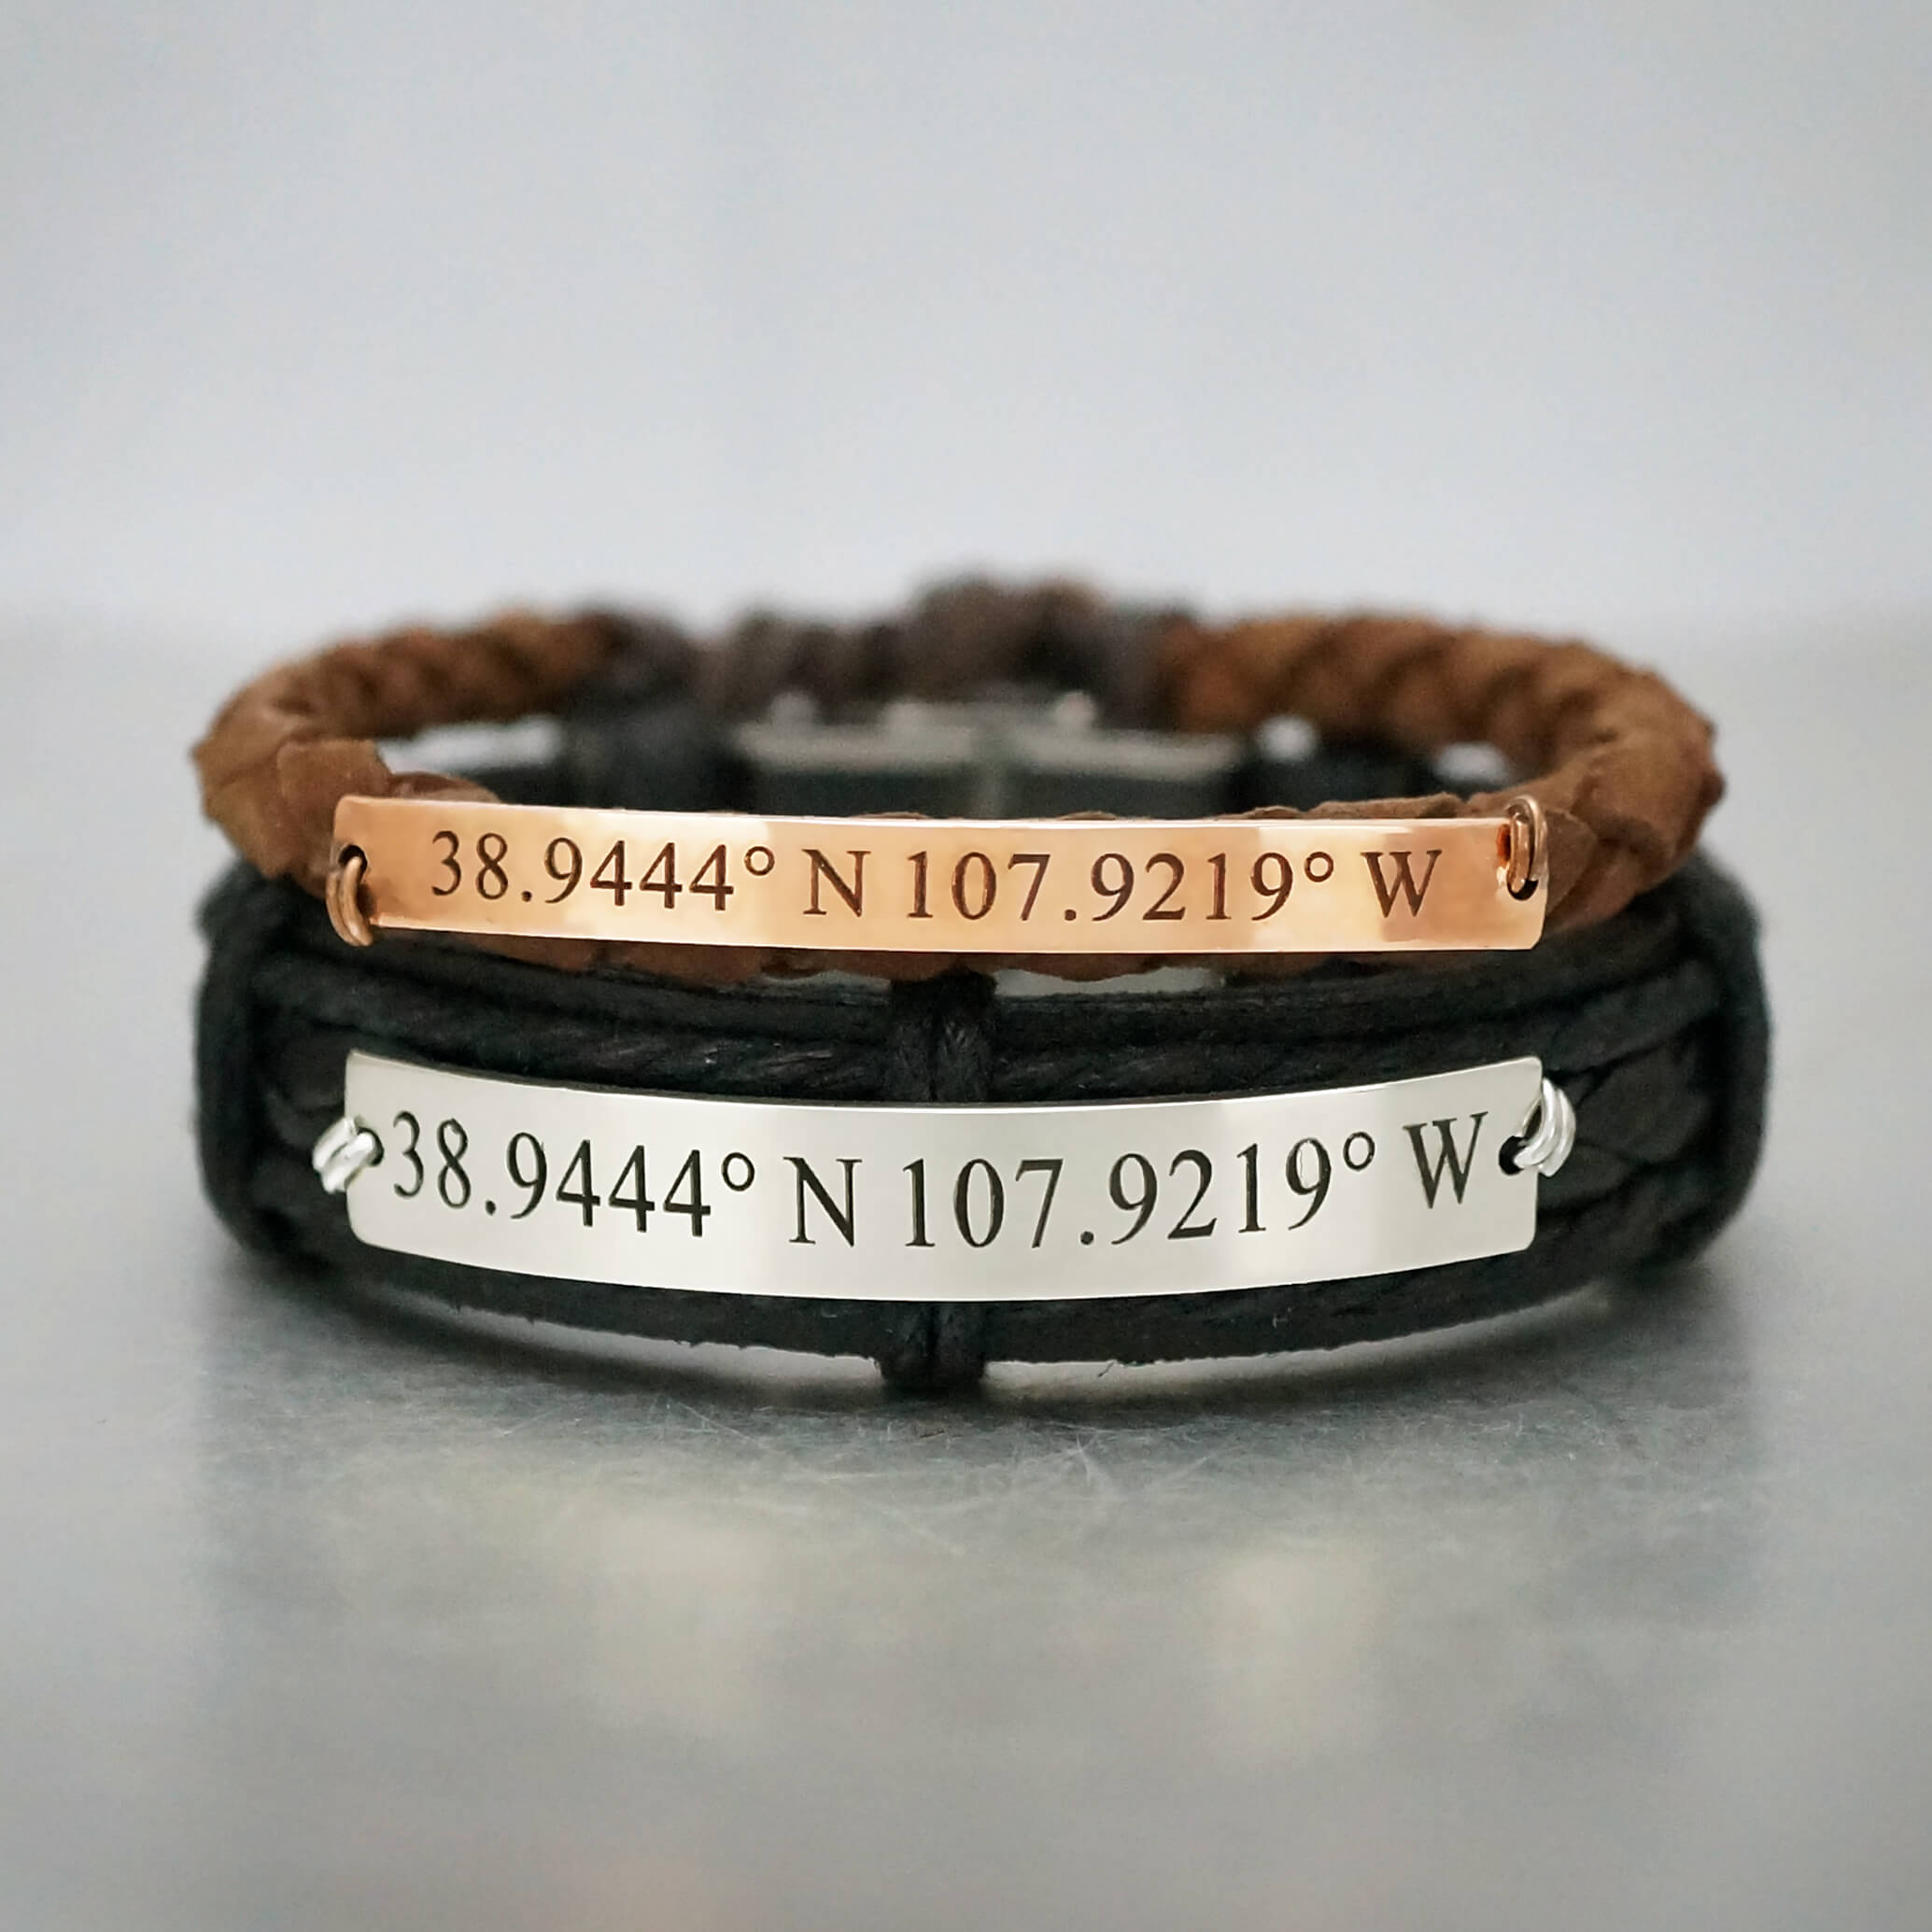 Buy Custom Engraved Coordinate Bracelet Personalized Long Online in India   Etsy